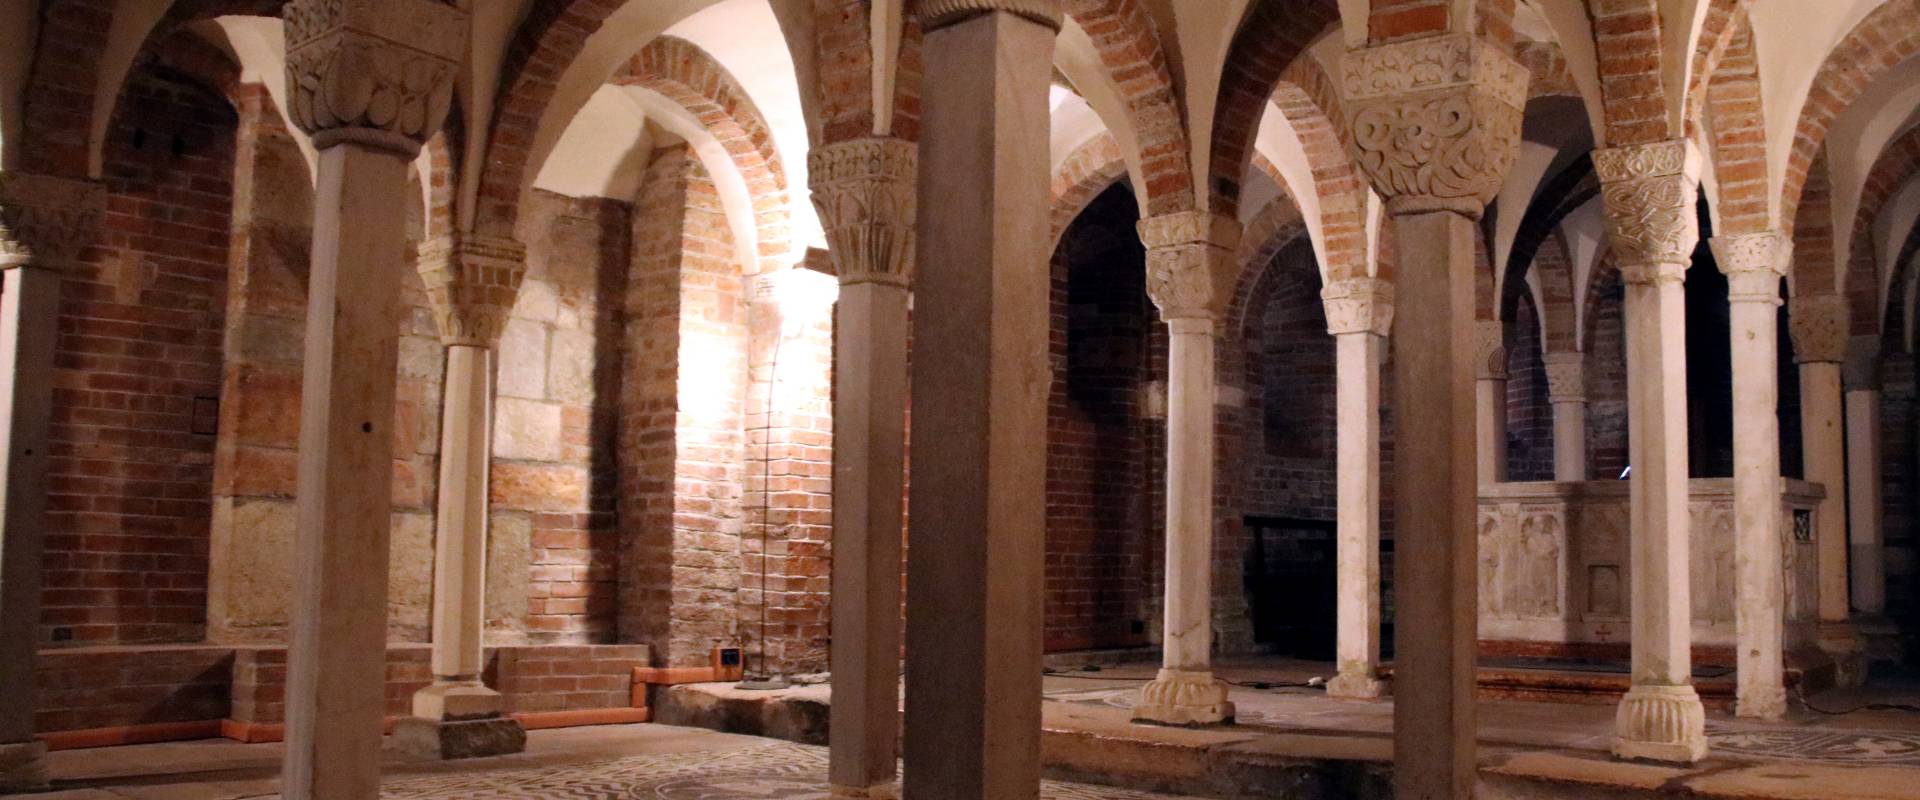 Basilica di San Savino (Piacenza), cripta 06 foto di Mongolo1984